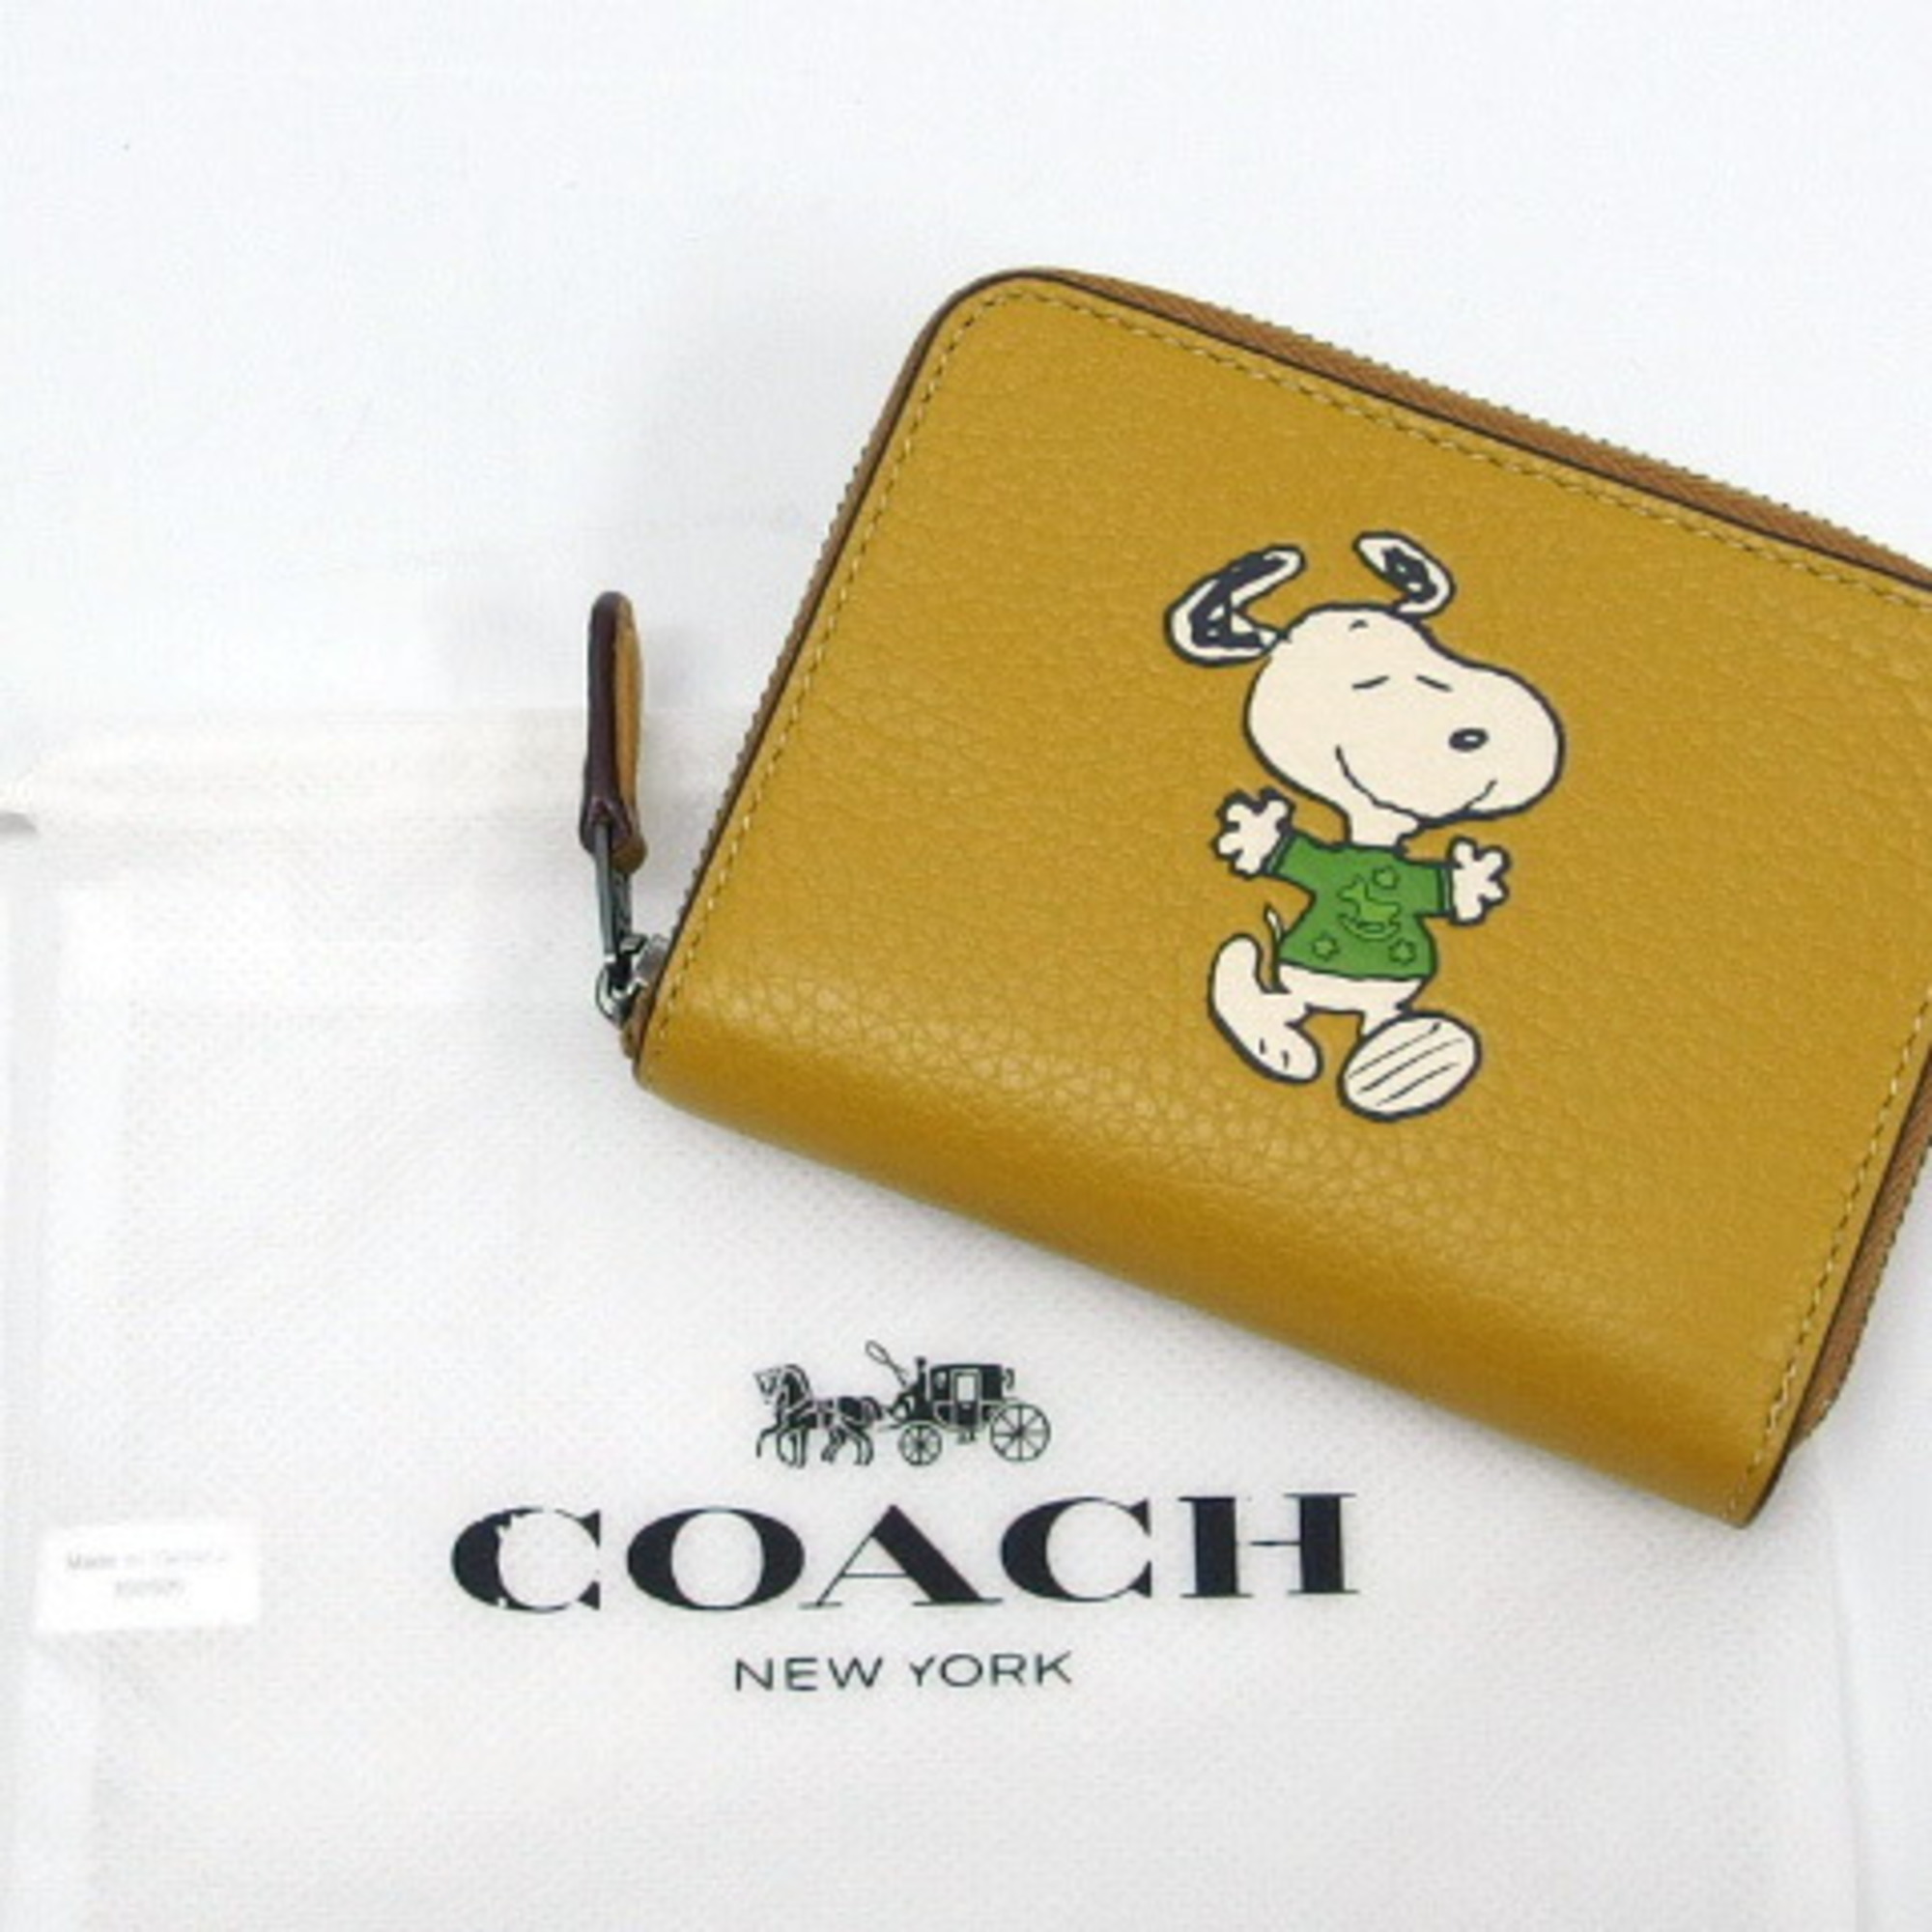 Coach x Peanuts collaboration Snoopy Walk motif small wallet